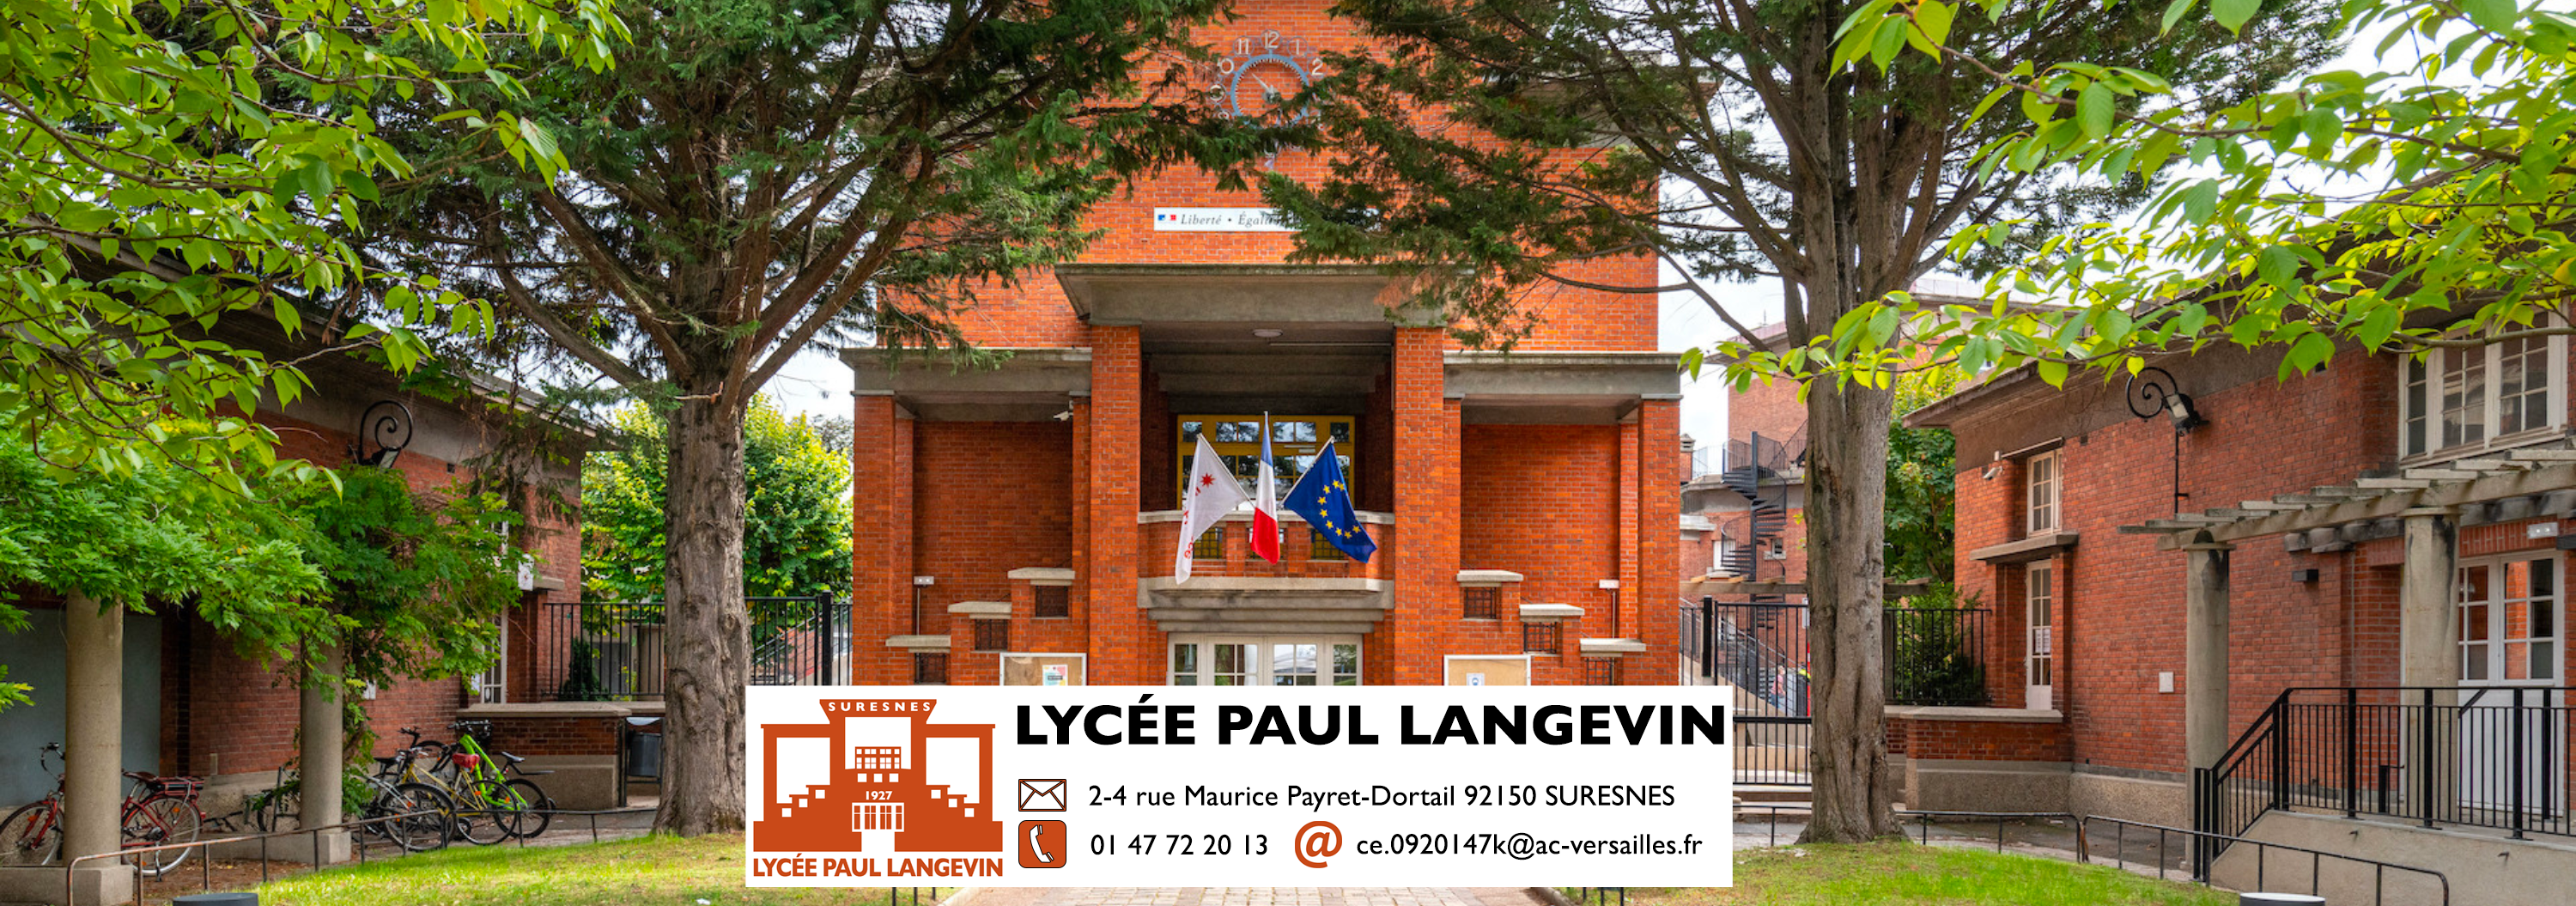 Lycée Paul Langevin - Suresnes (92150)